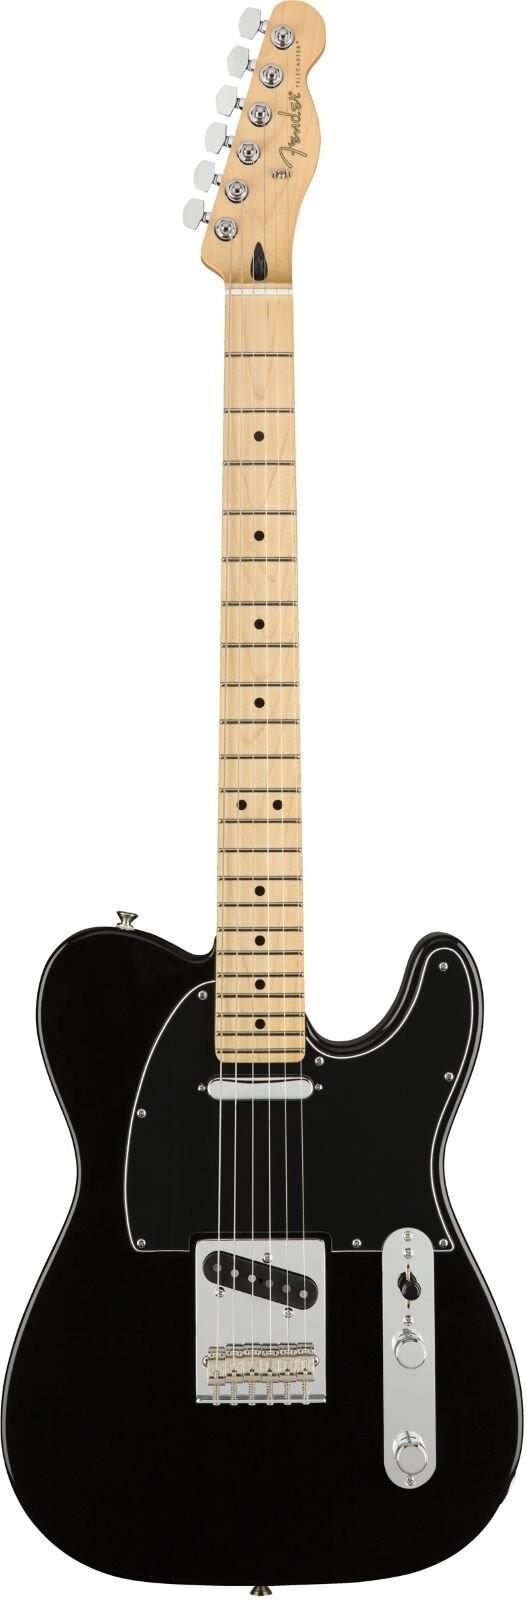 Fender Player Telecaster Maple Fingerboard - Black : photo 1